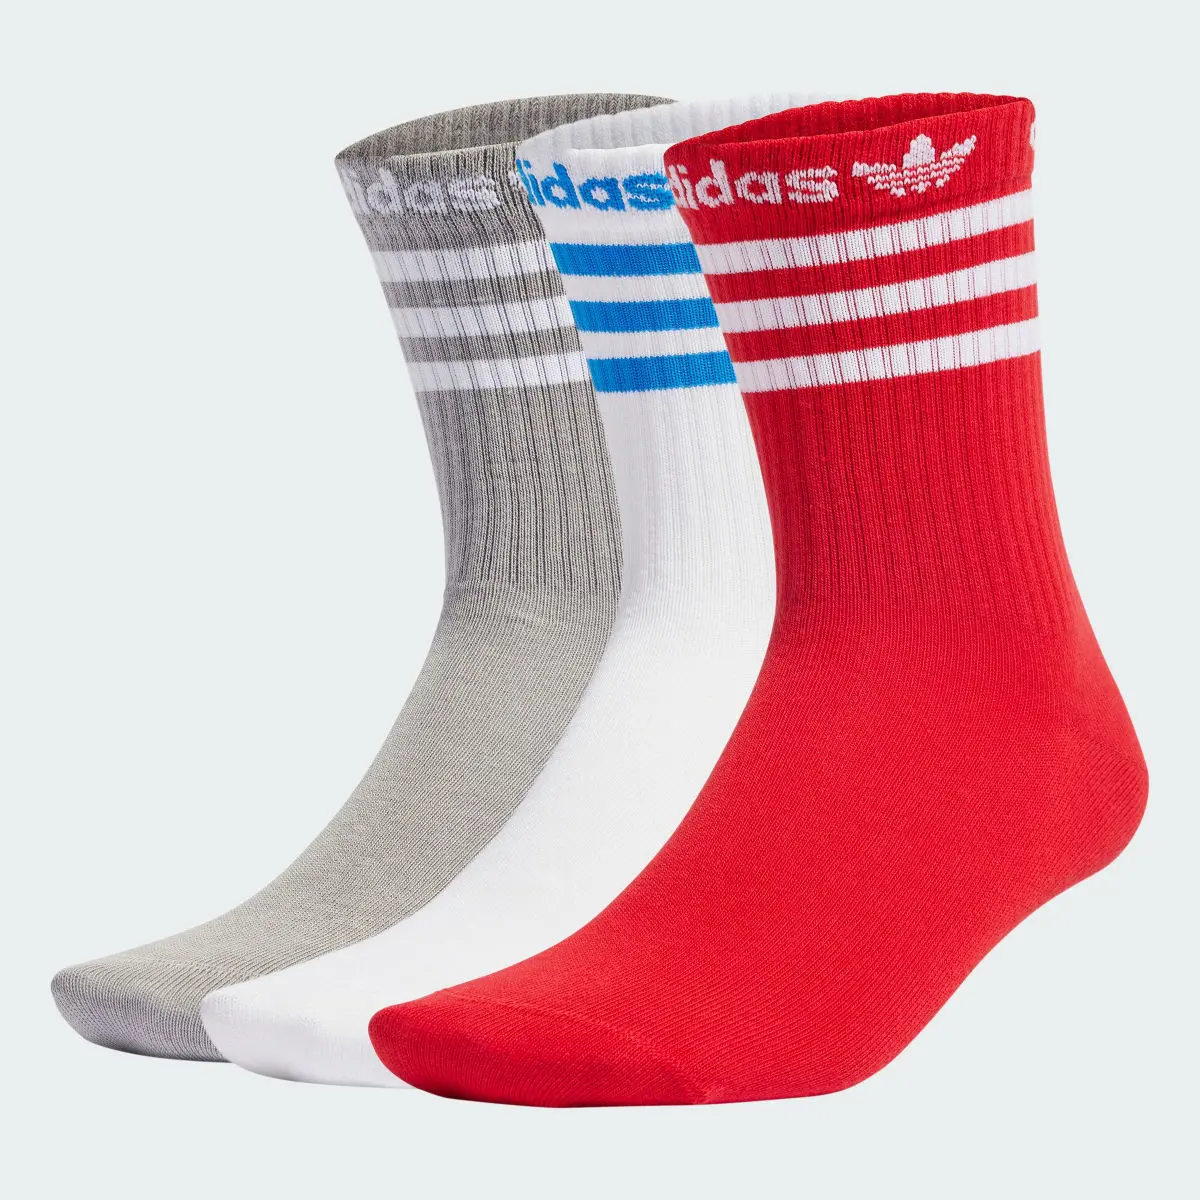 Adidas Bilekli Çorap - 3 Çift. 2